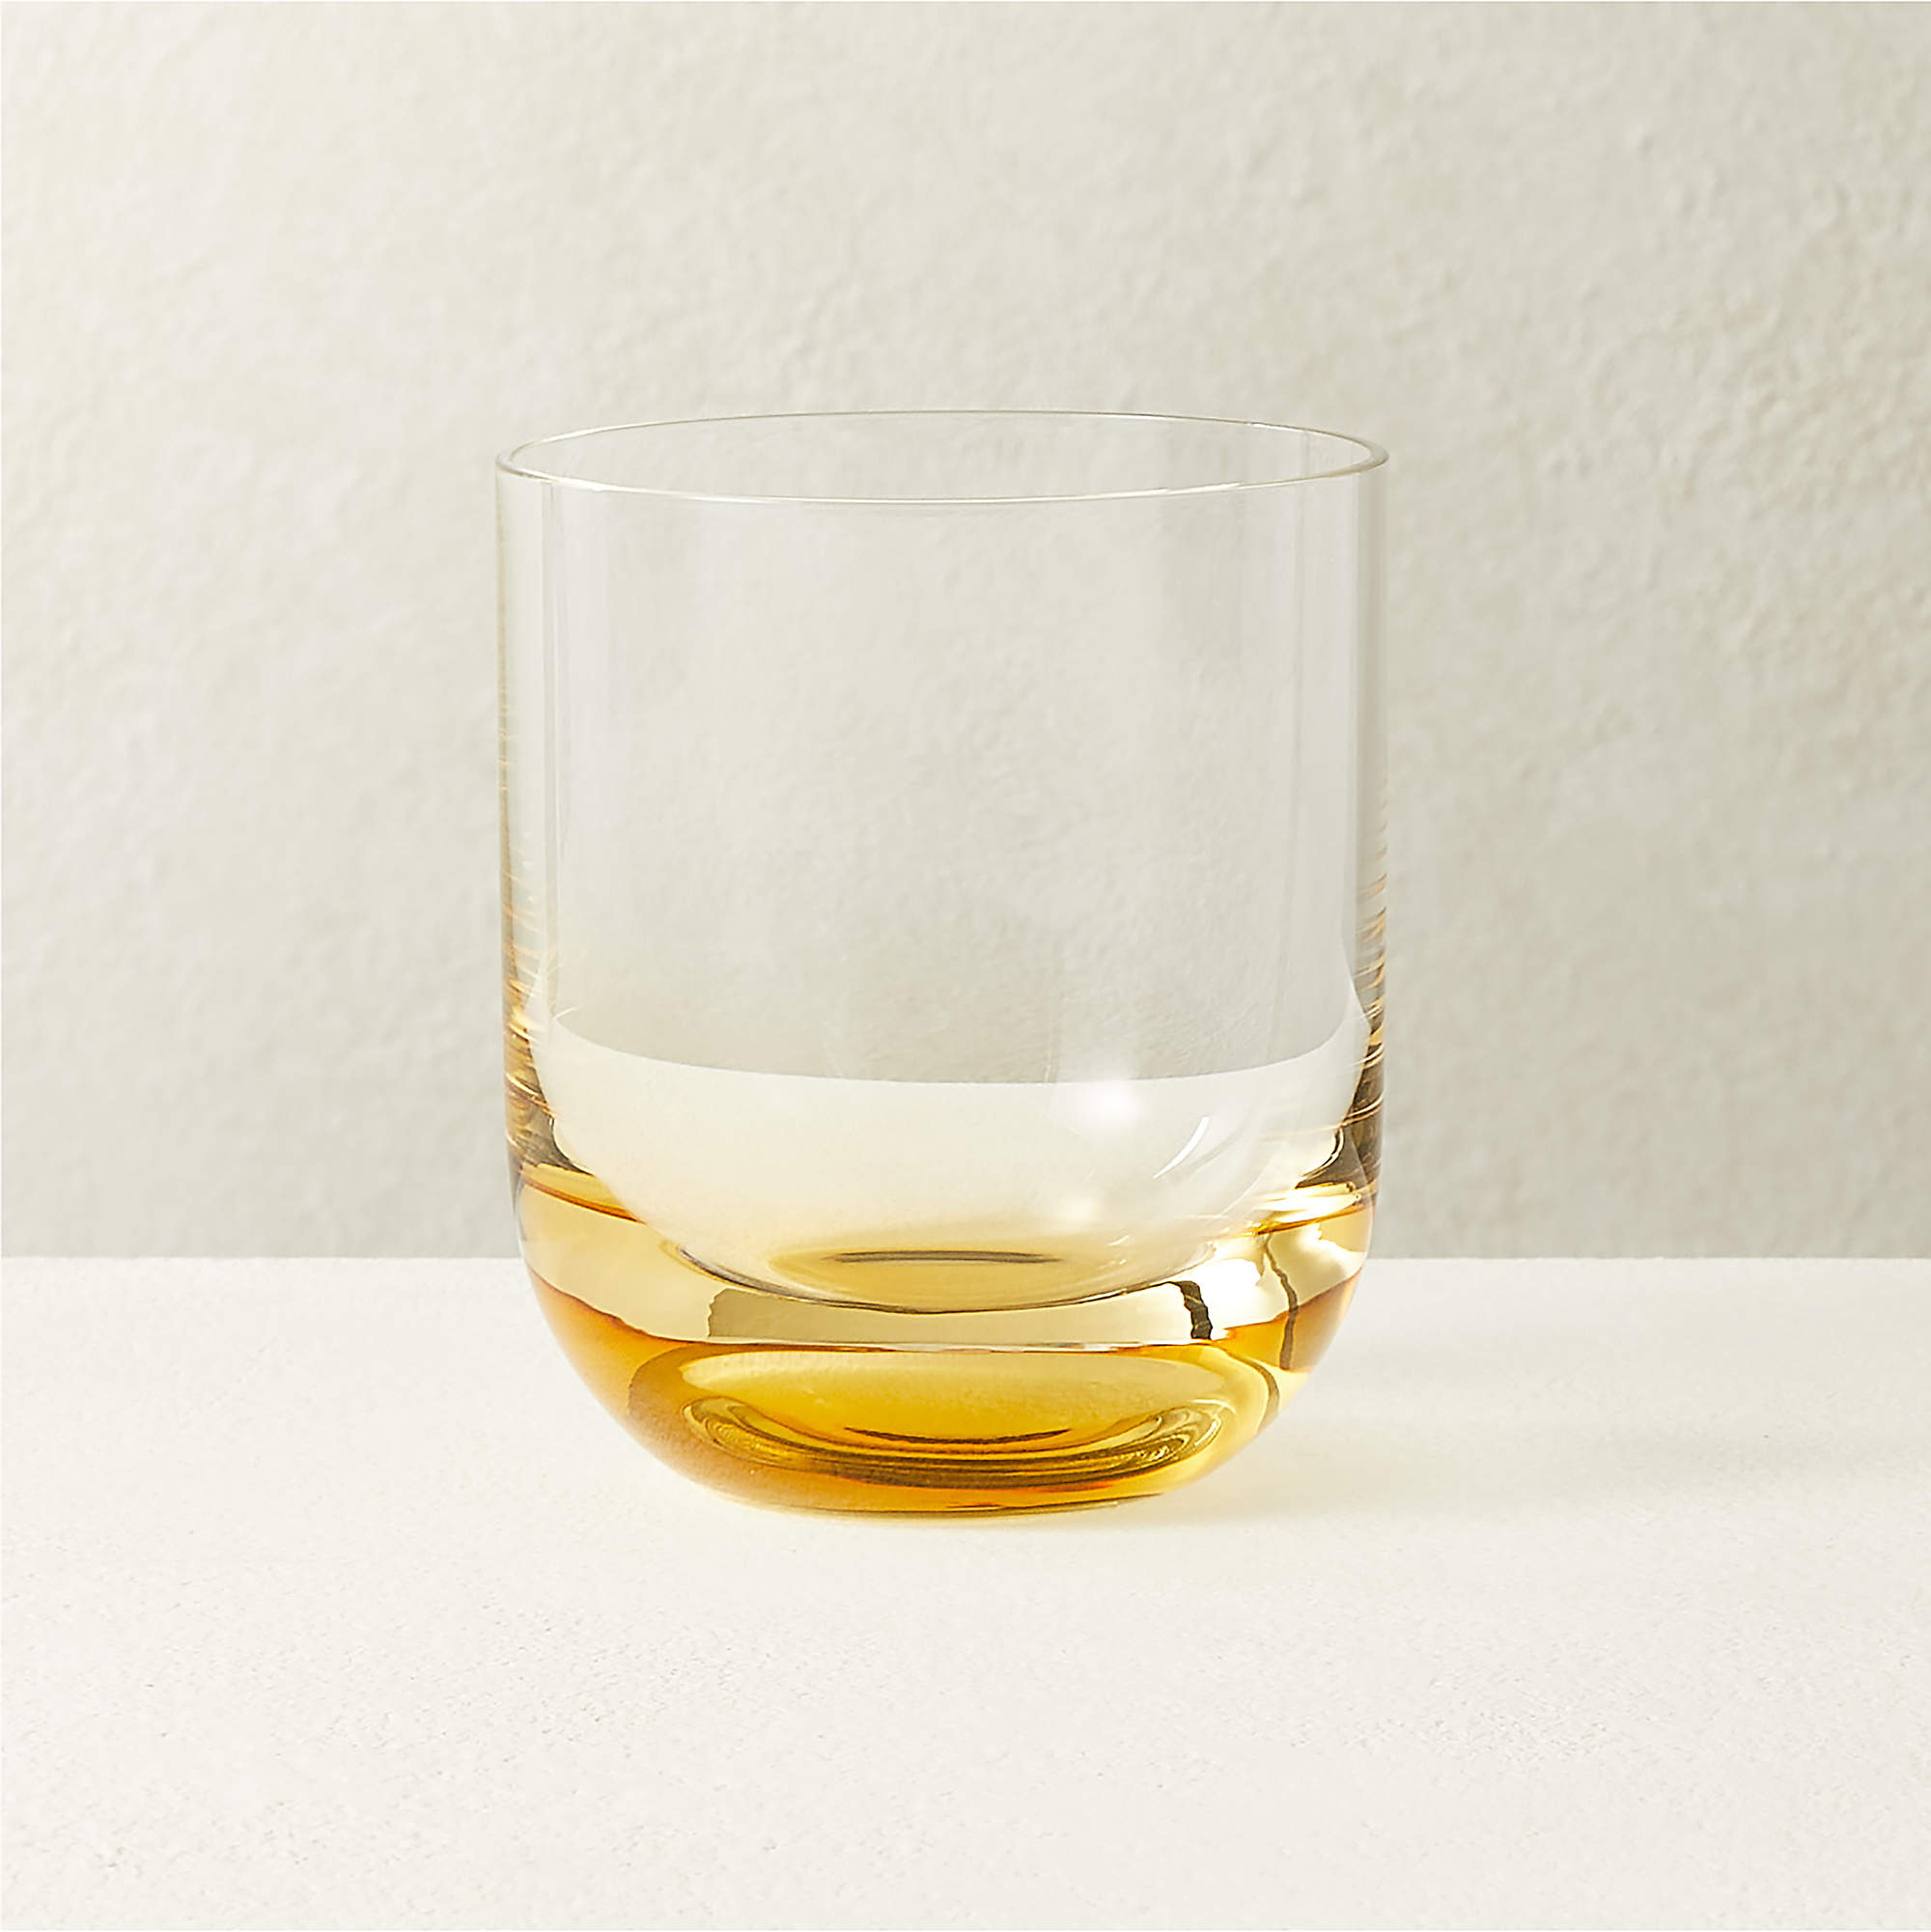 Norlan Glass Norlan Whisky Glasses, Set of 2, Bespoke Post